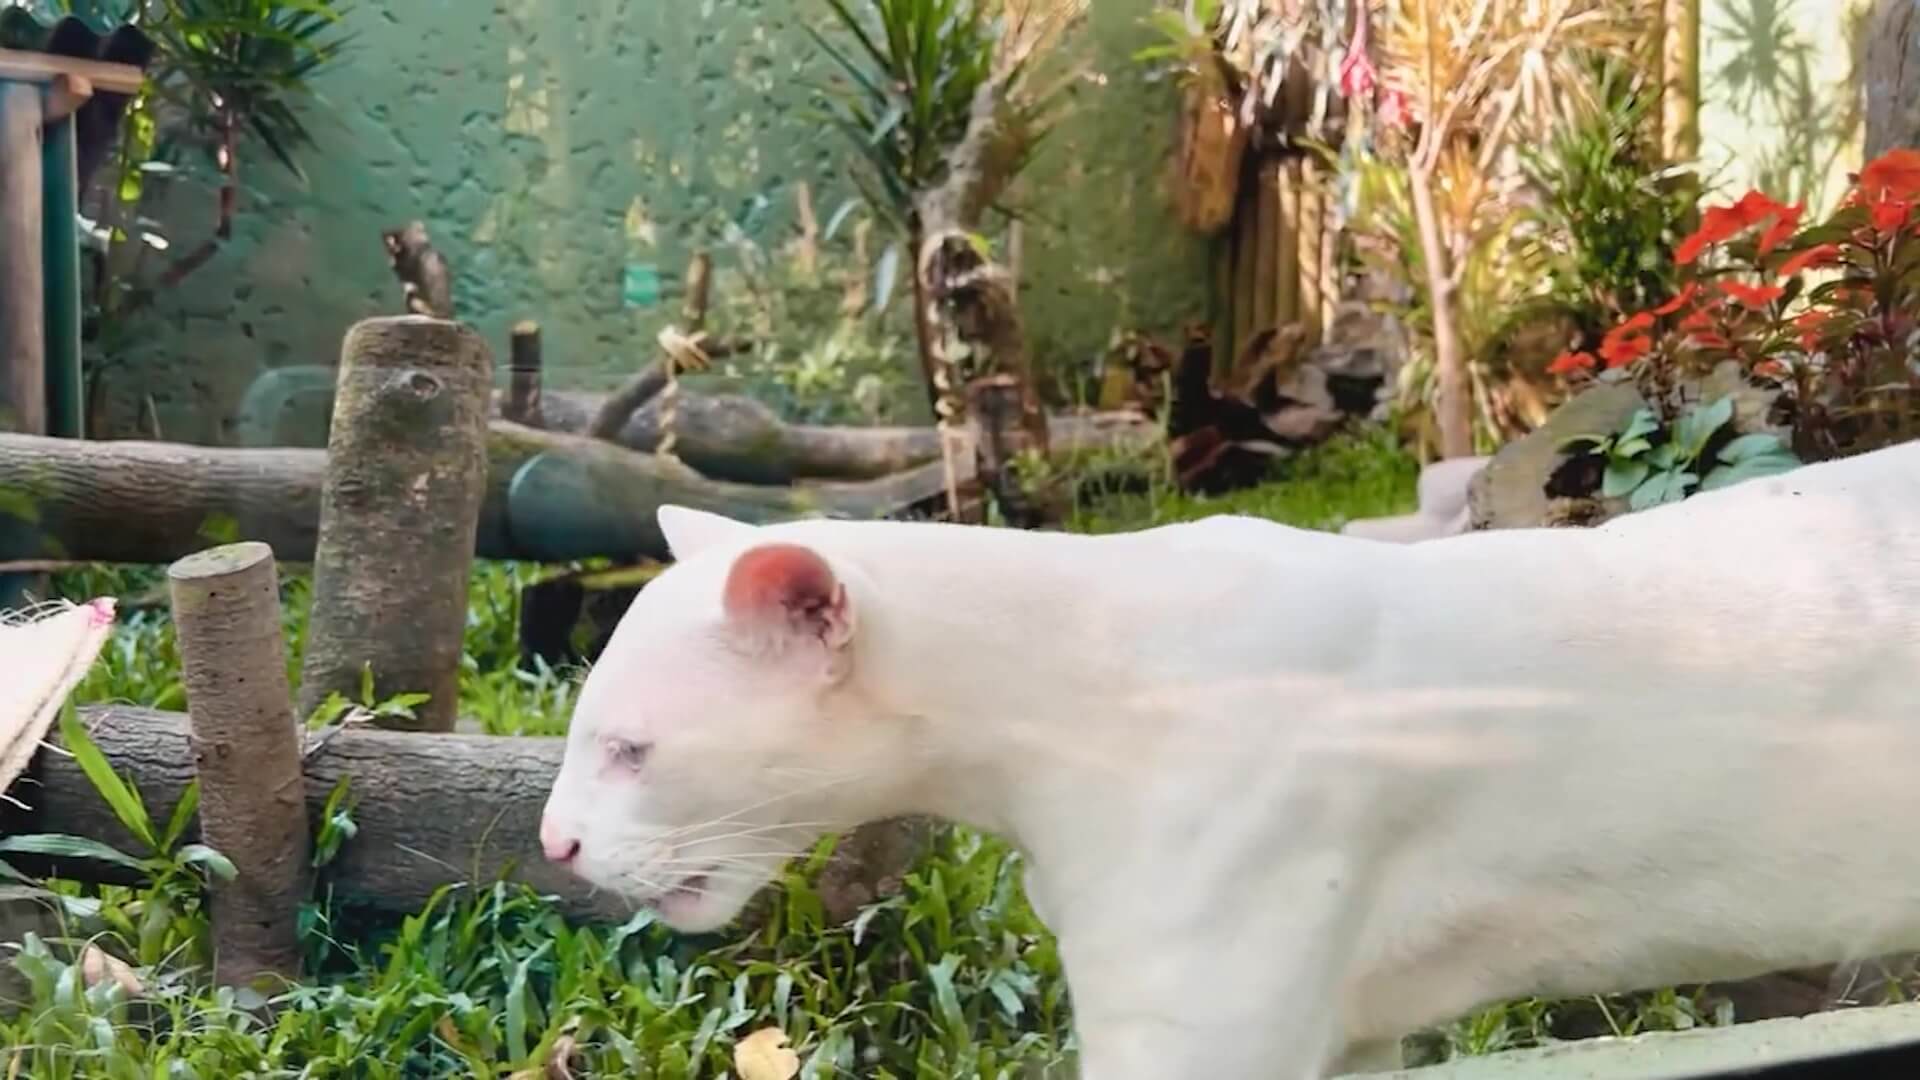 Primer ocelote albino en Colombia